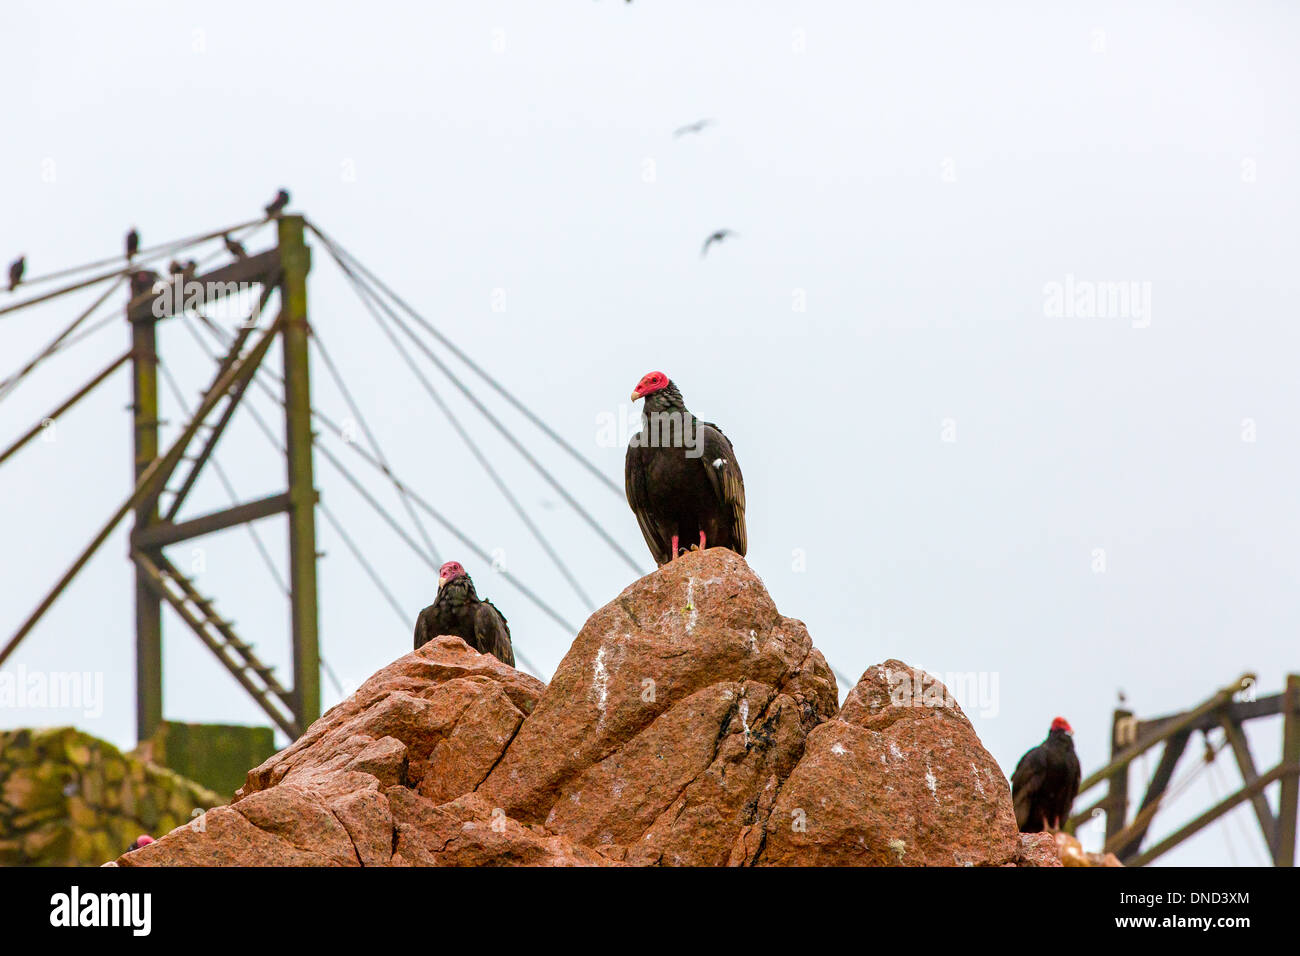 Vulture red neck birds in Ballestas Islands.Peru.South America. National park Paracas. Flora and fauna Stock Photo